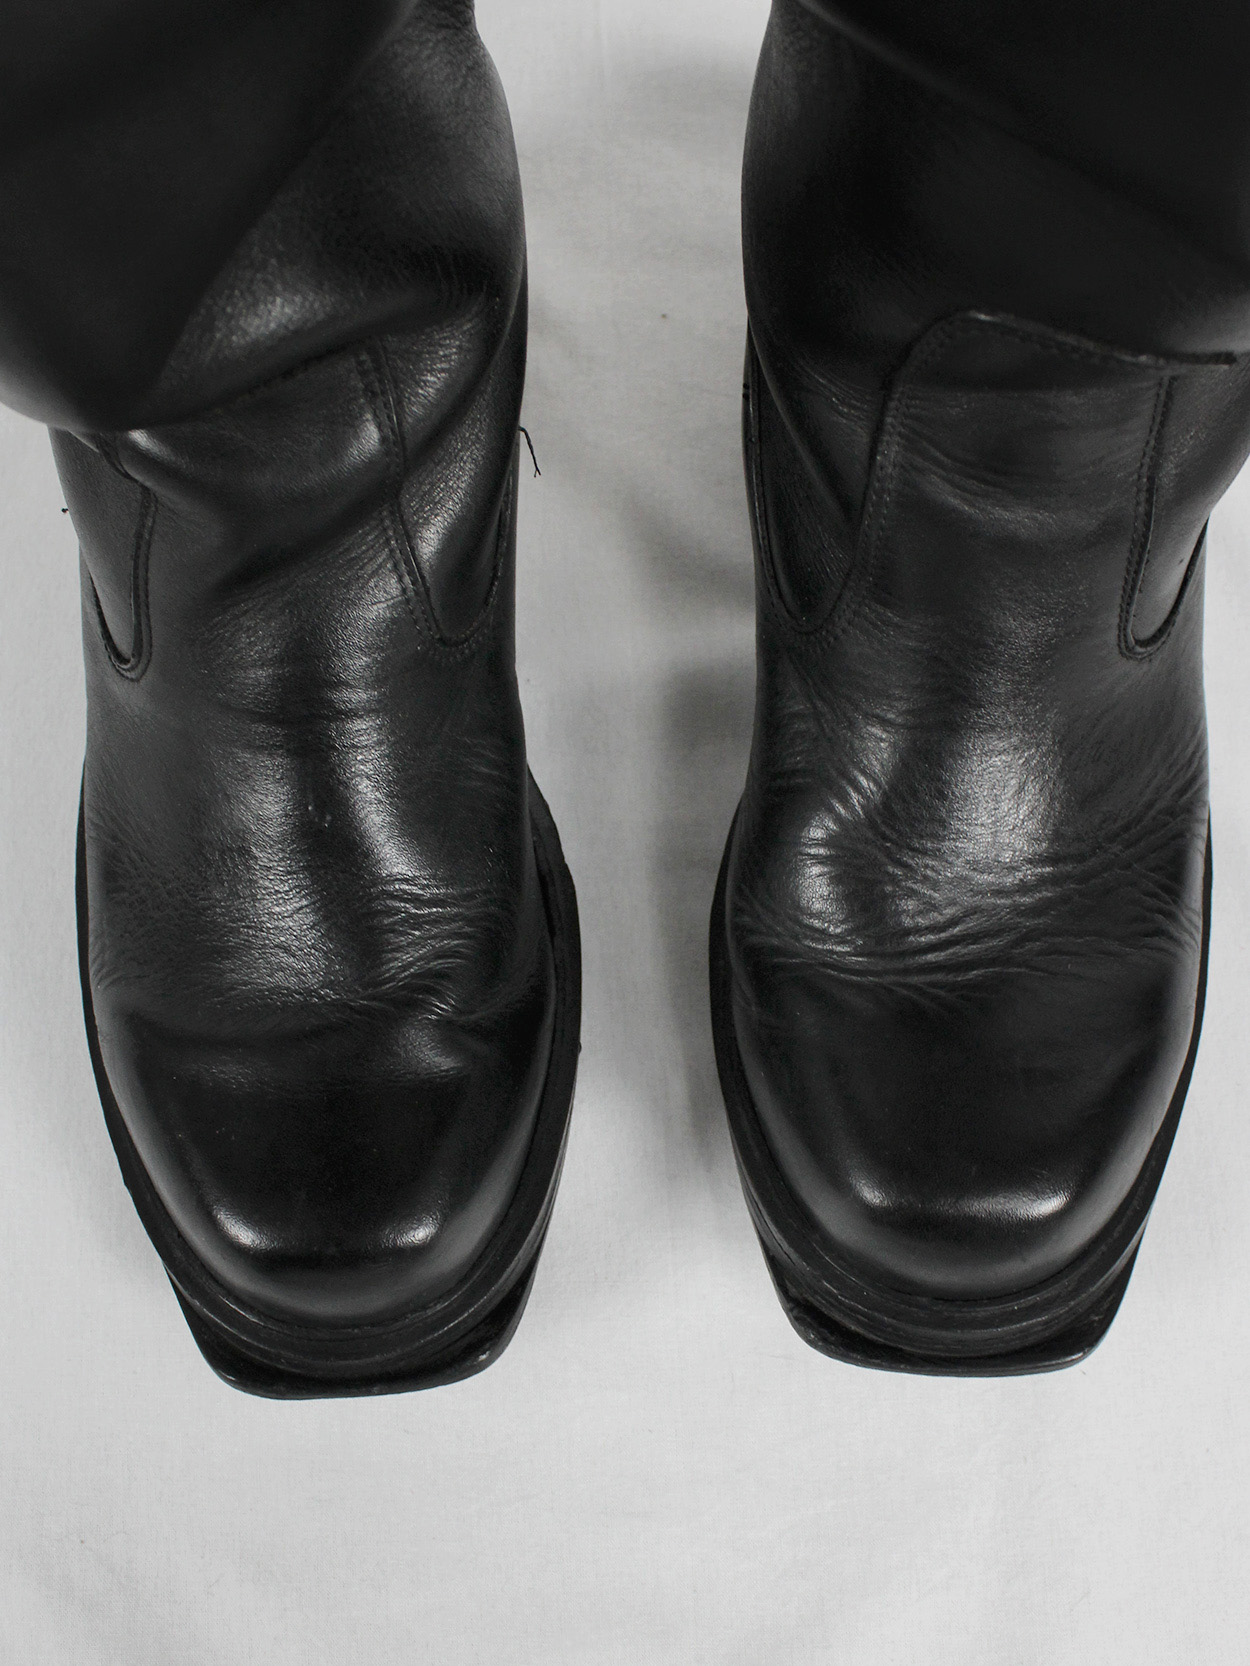 vaniitas vintage Dirk Bikkembergs black tall boots with metal heel and metal pulls 1990s 90s archive 5125